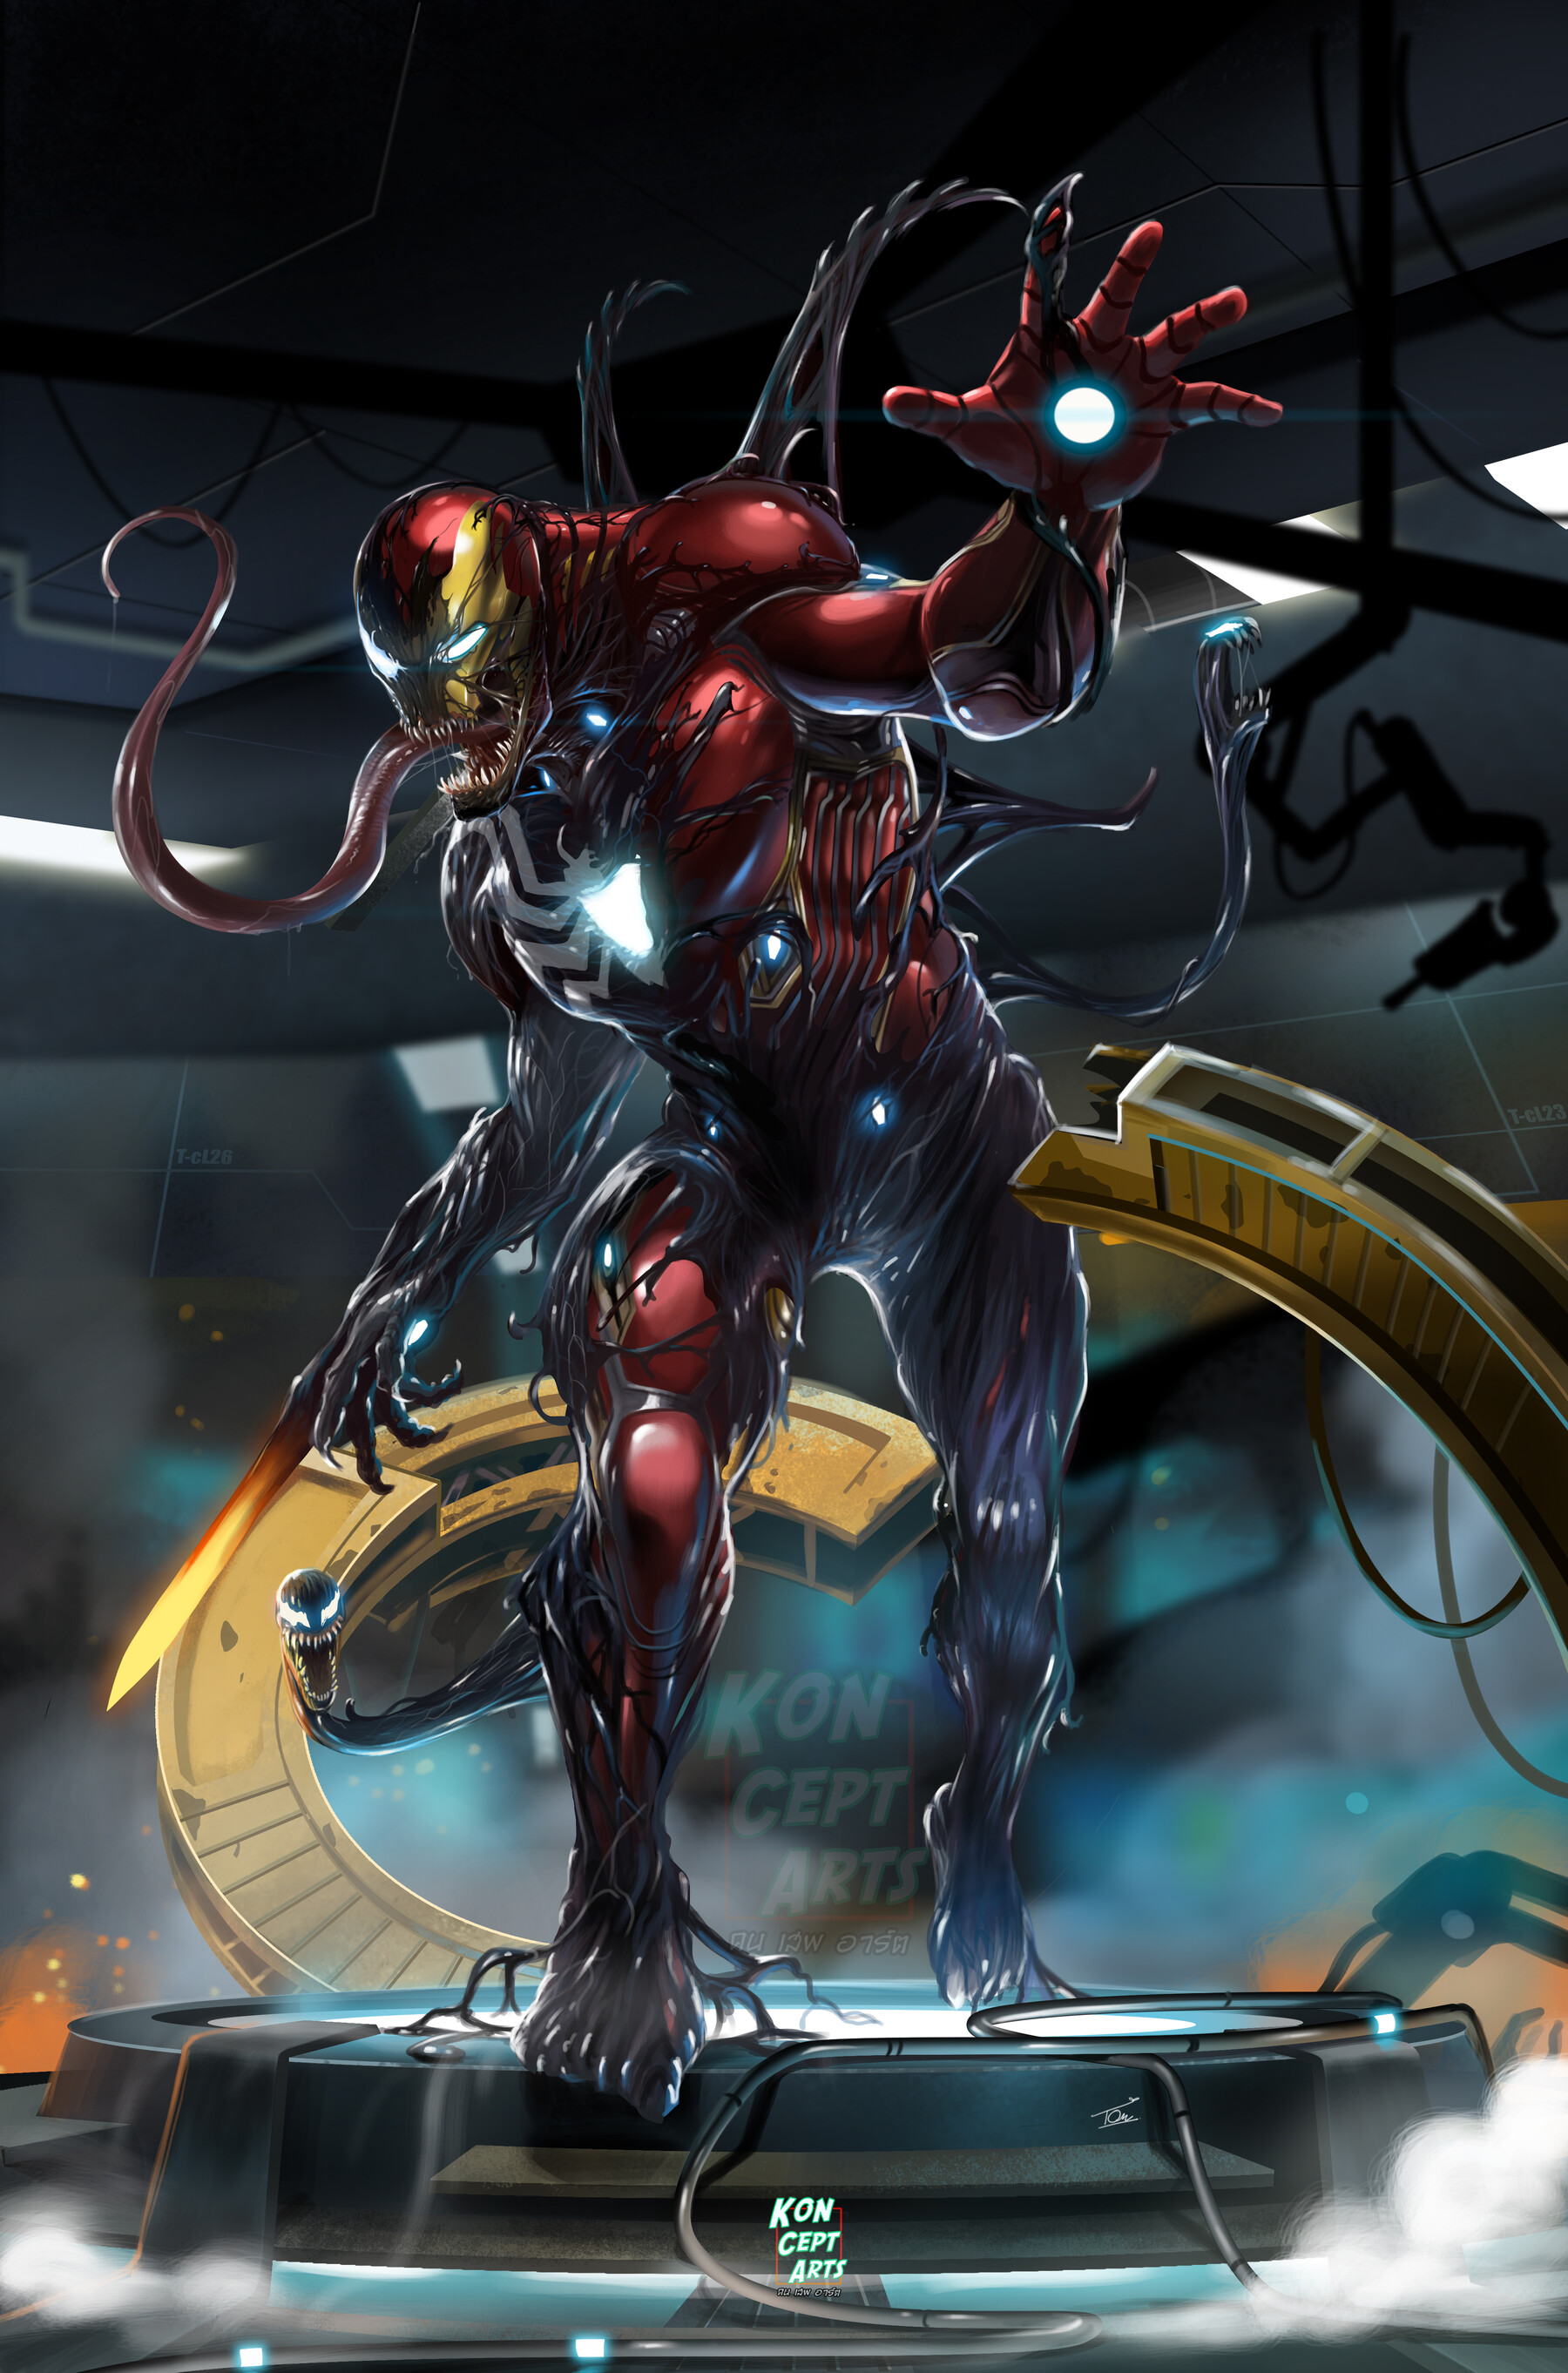 Grupo Validación Síntomas tanat fakon - Venom x Iron man Fanart